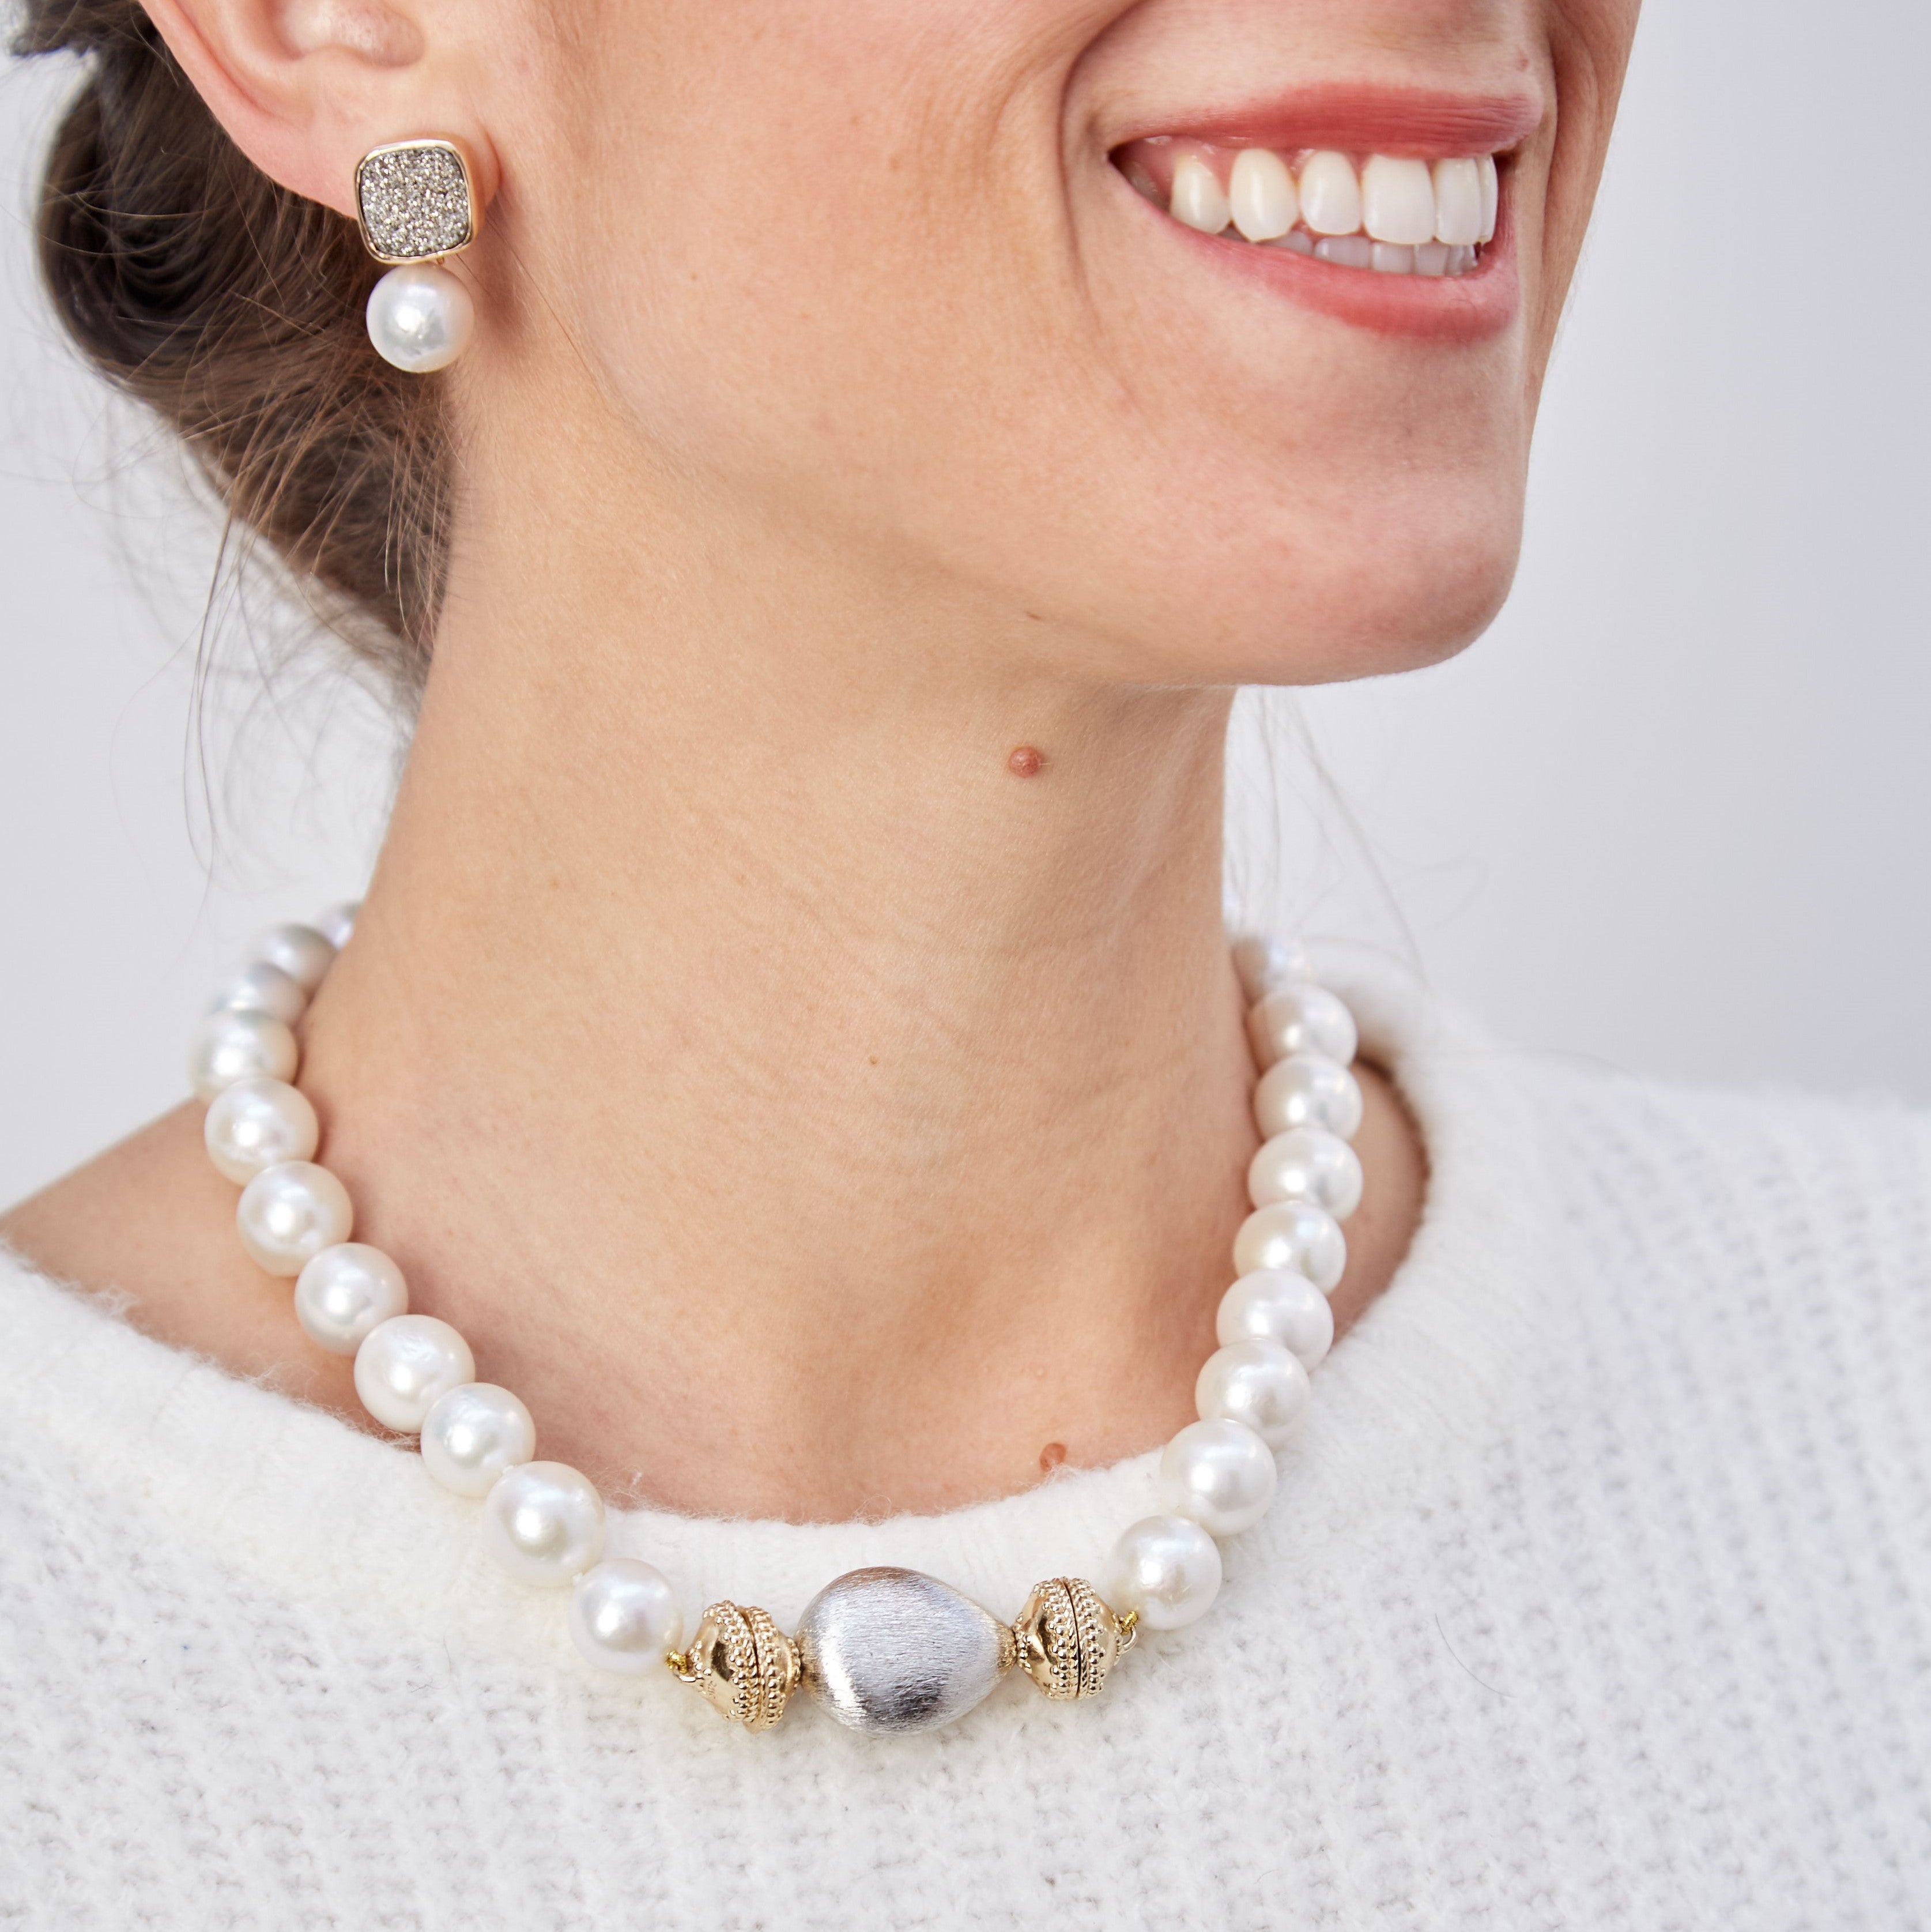 White Freshwater Pearl Earring Drops